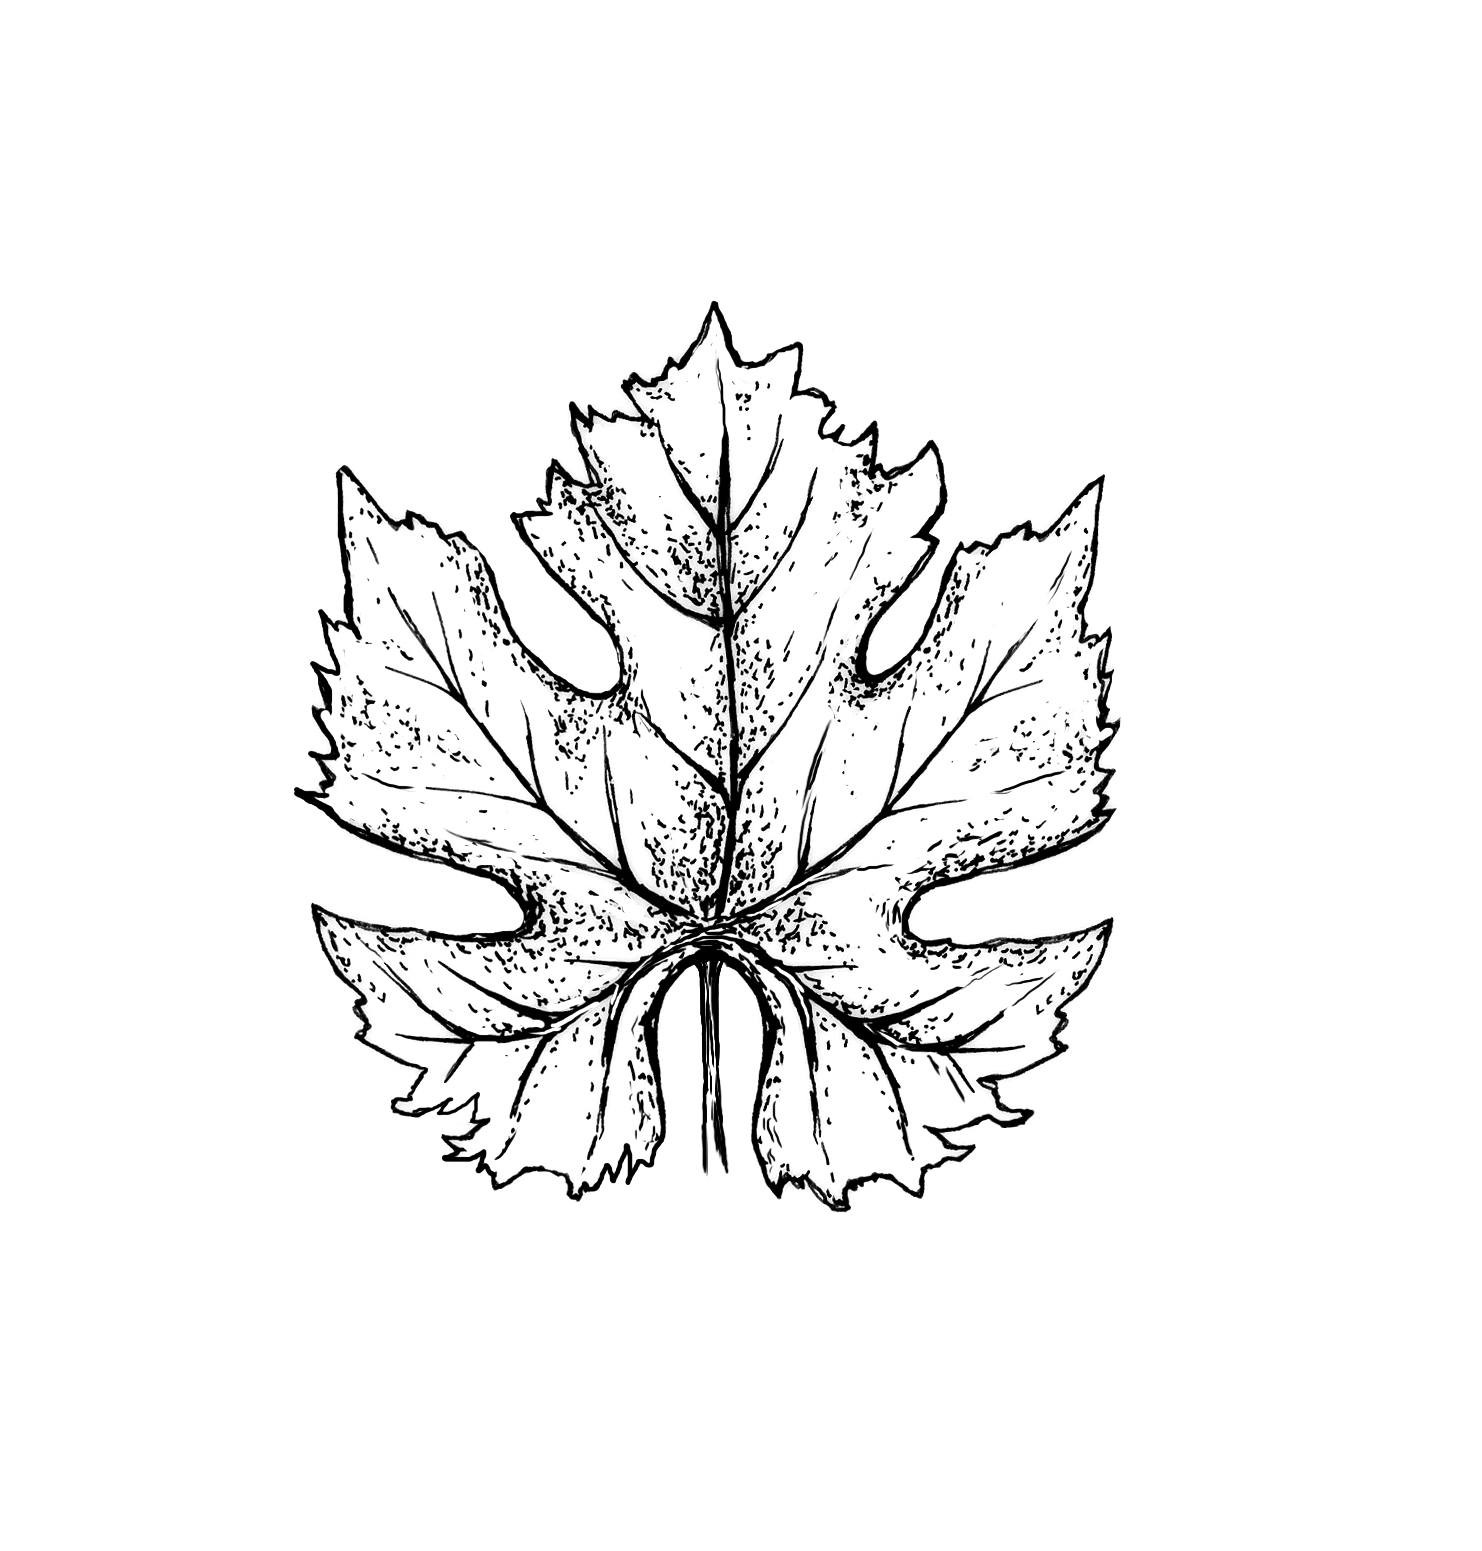 merlot-leaf.jpg